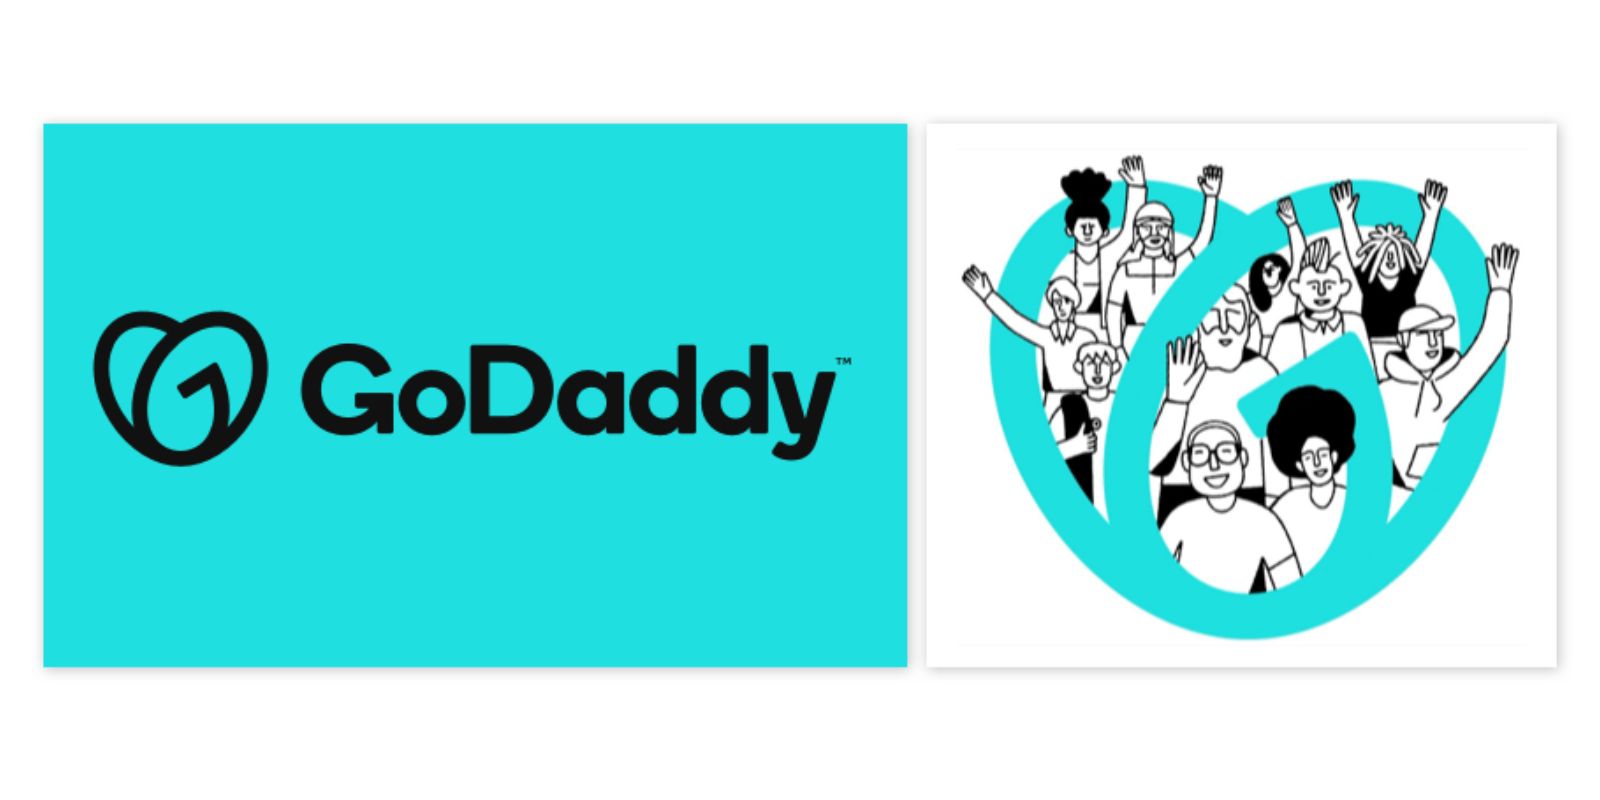 godaddy logo and brand